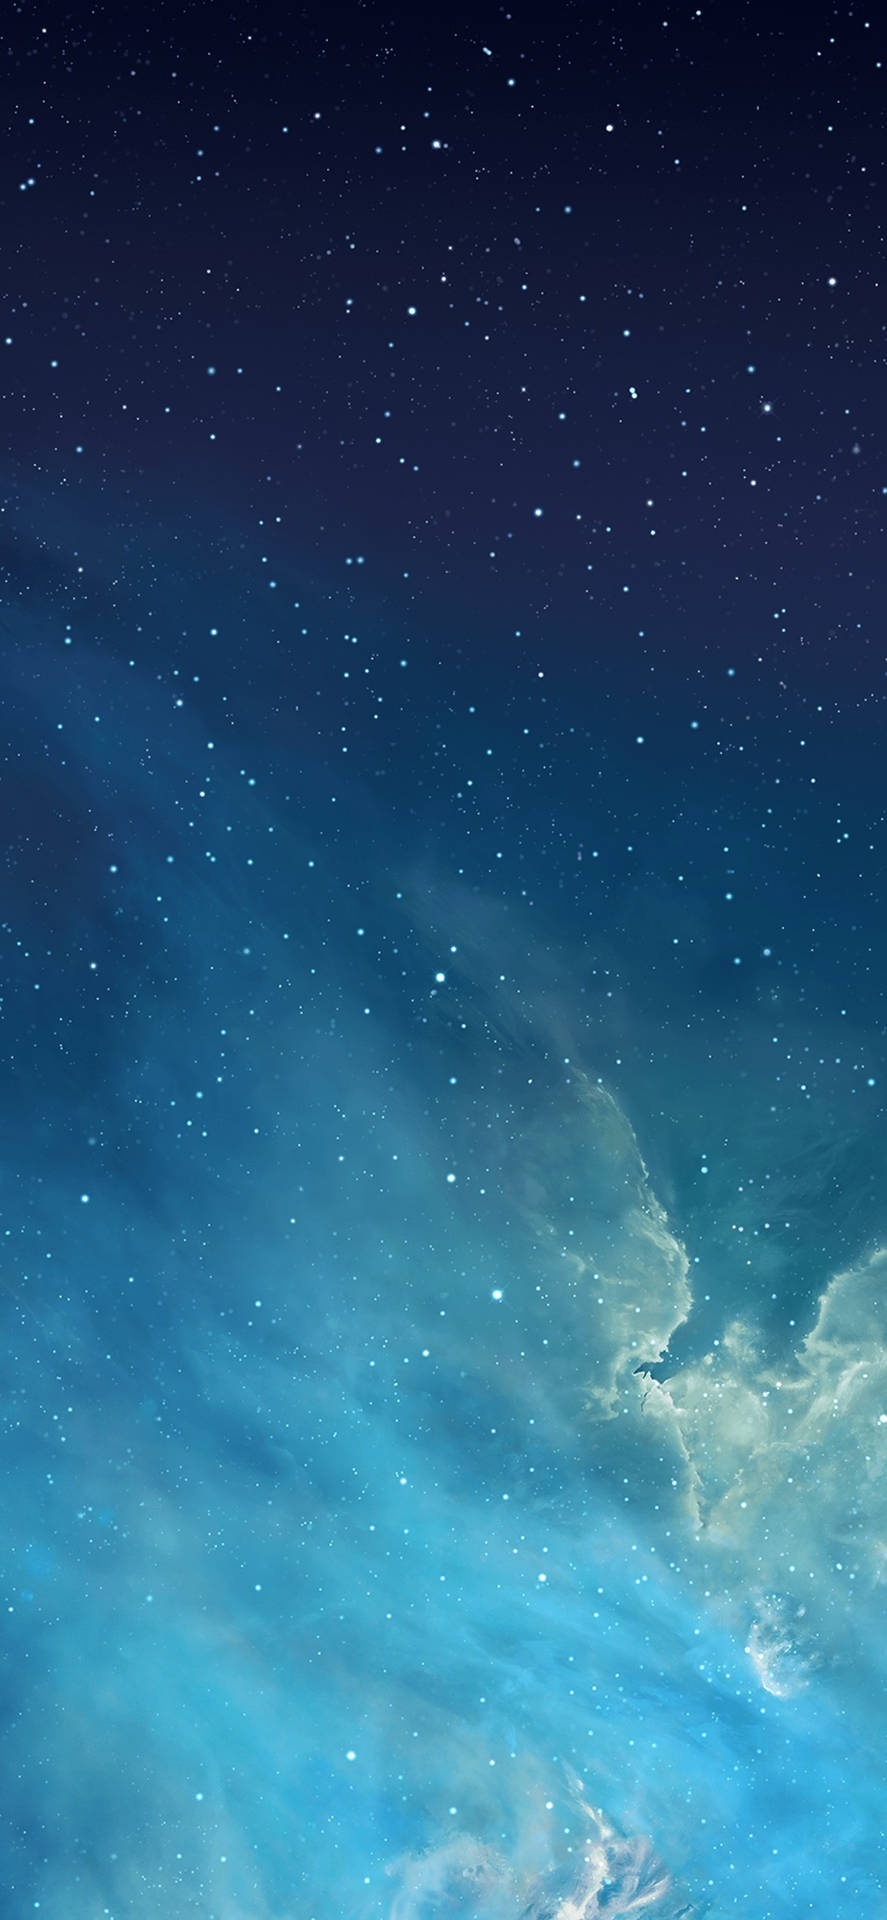 iPhone X Original Blue Starry Sky Wallpaper